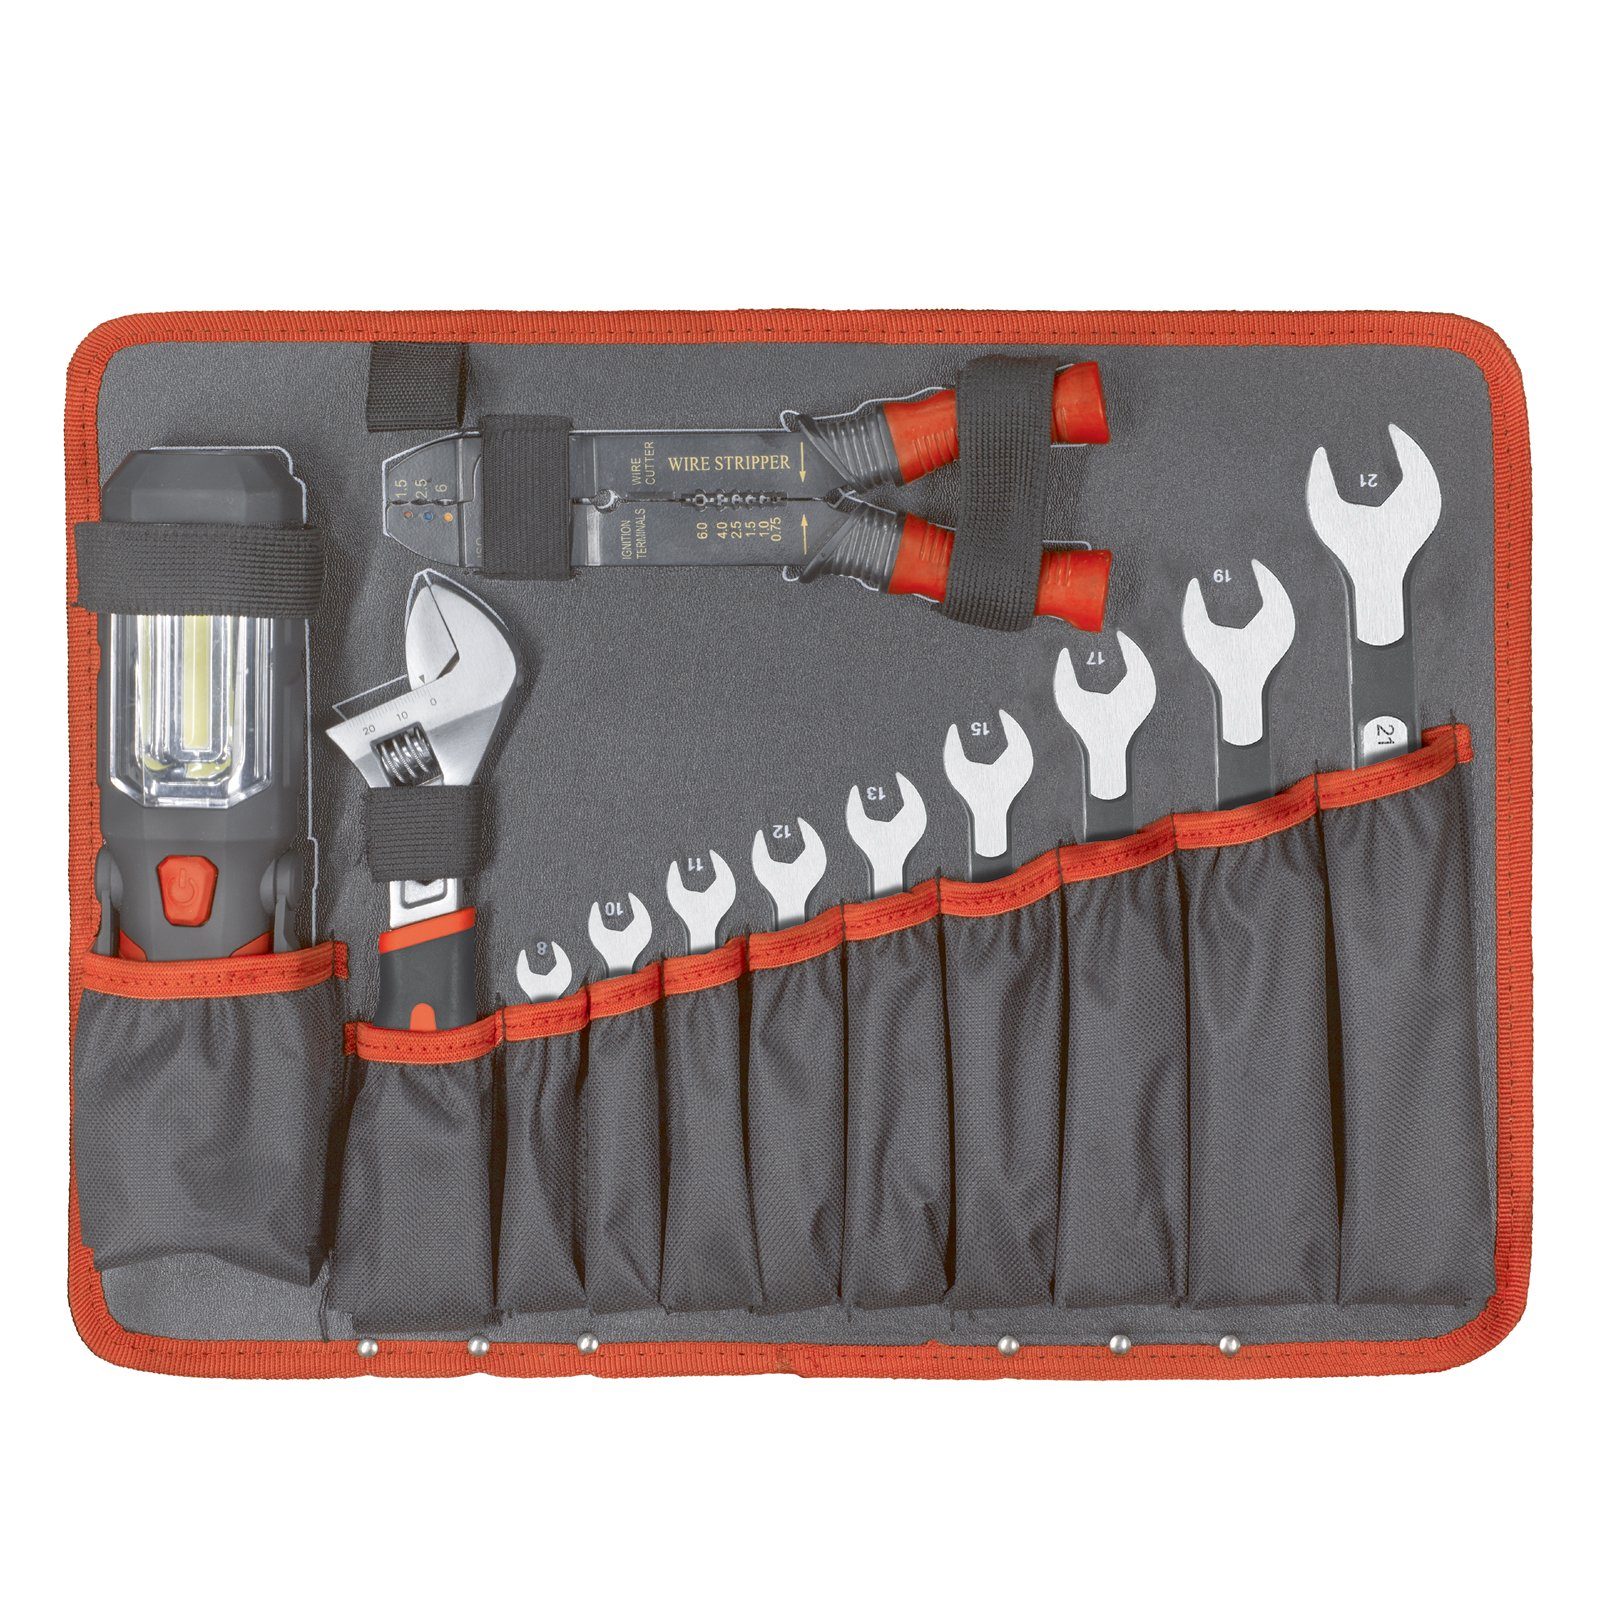 kwb kwb gefüllt, Werkzeug-Set, Werkzeug-Koffer inkl. 175 Werkzeugset Trolley (Set) -teilig,